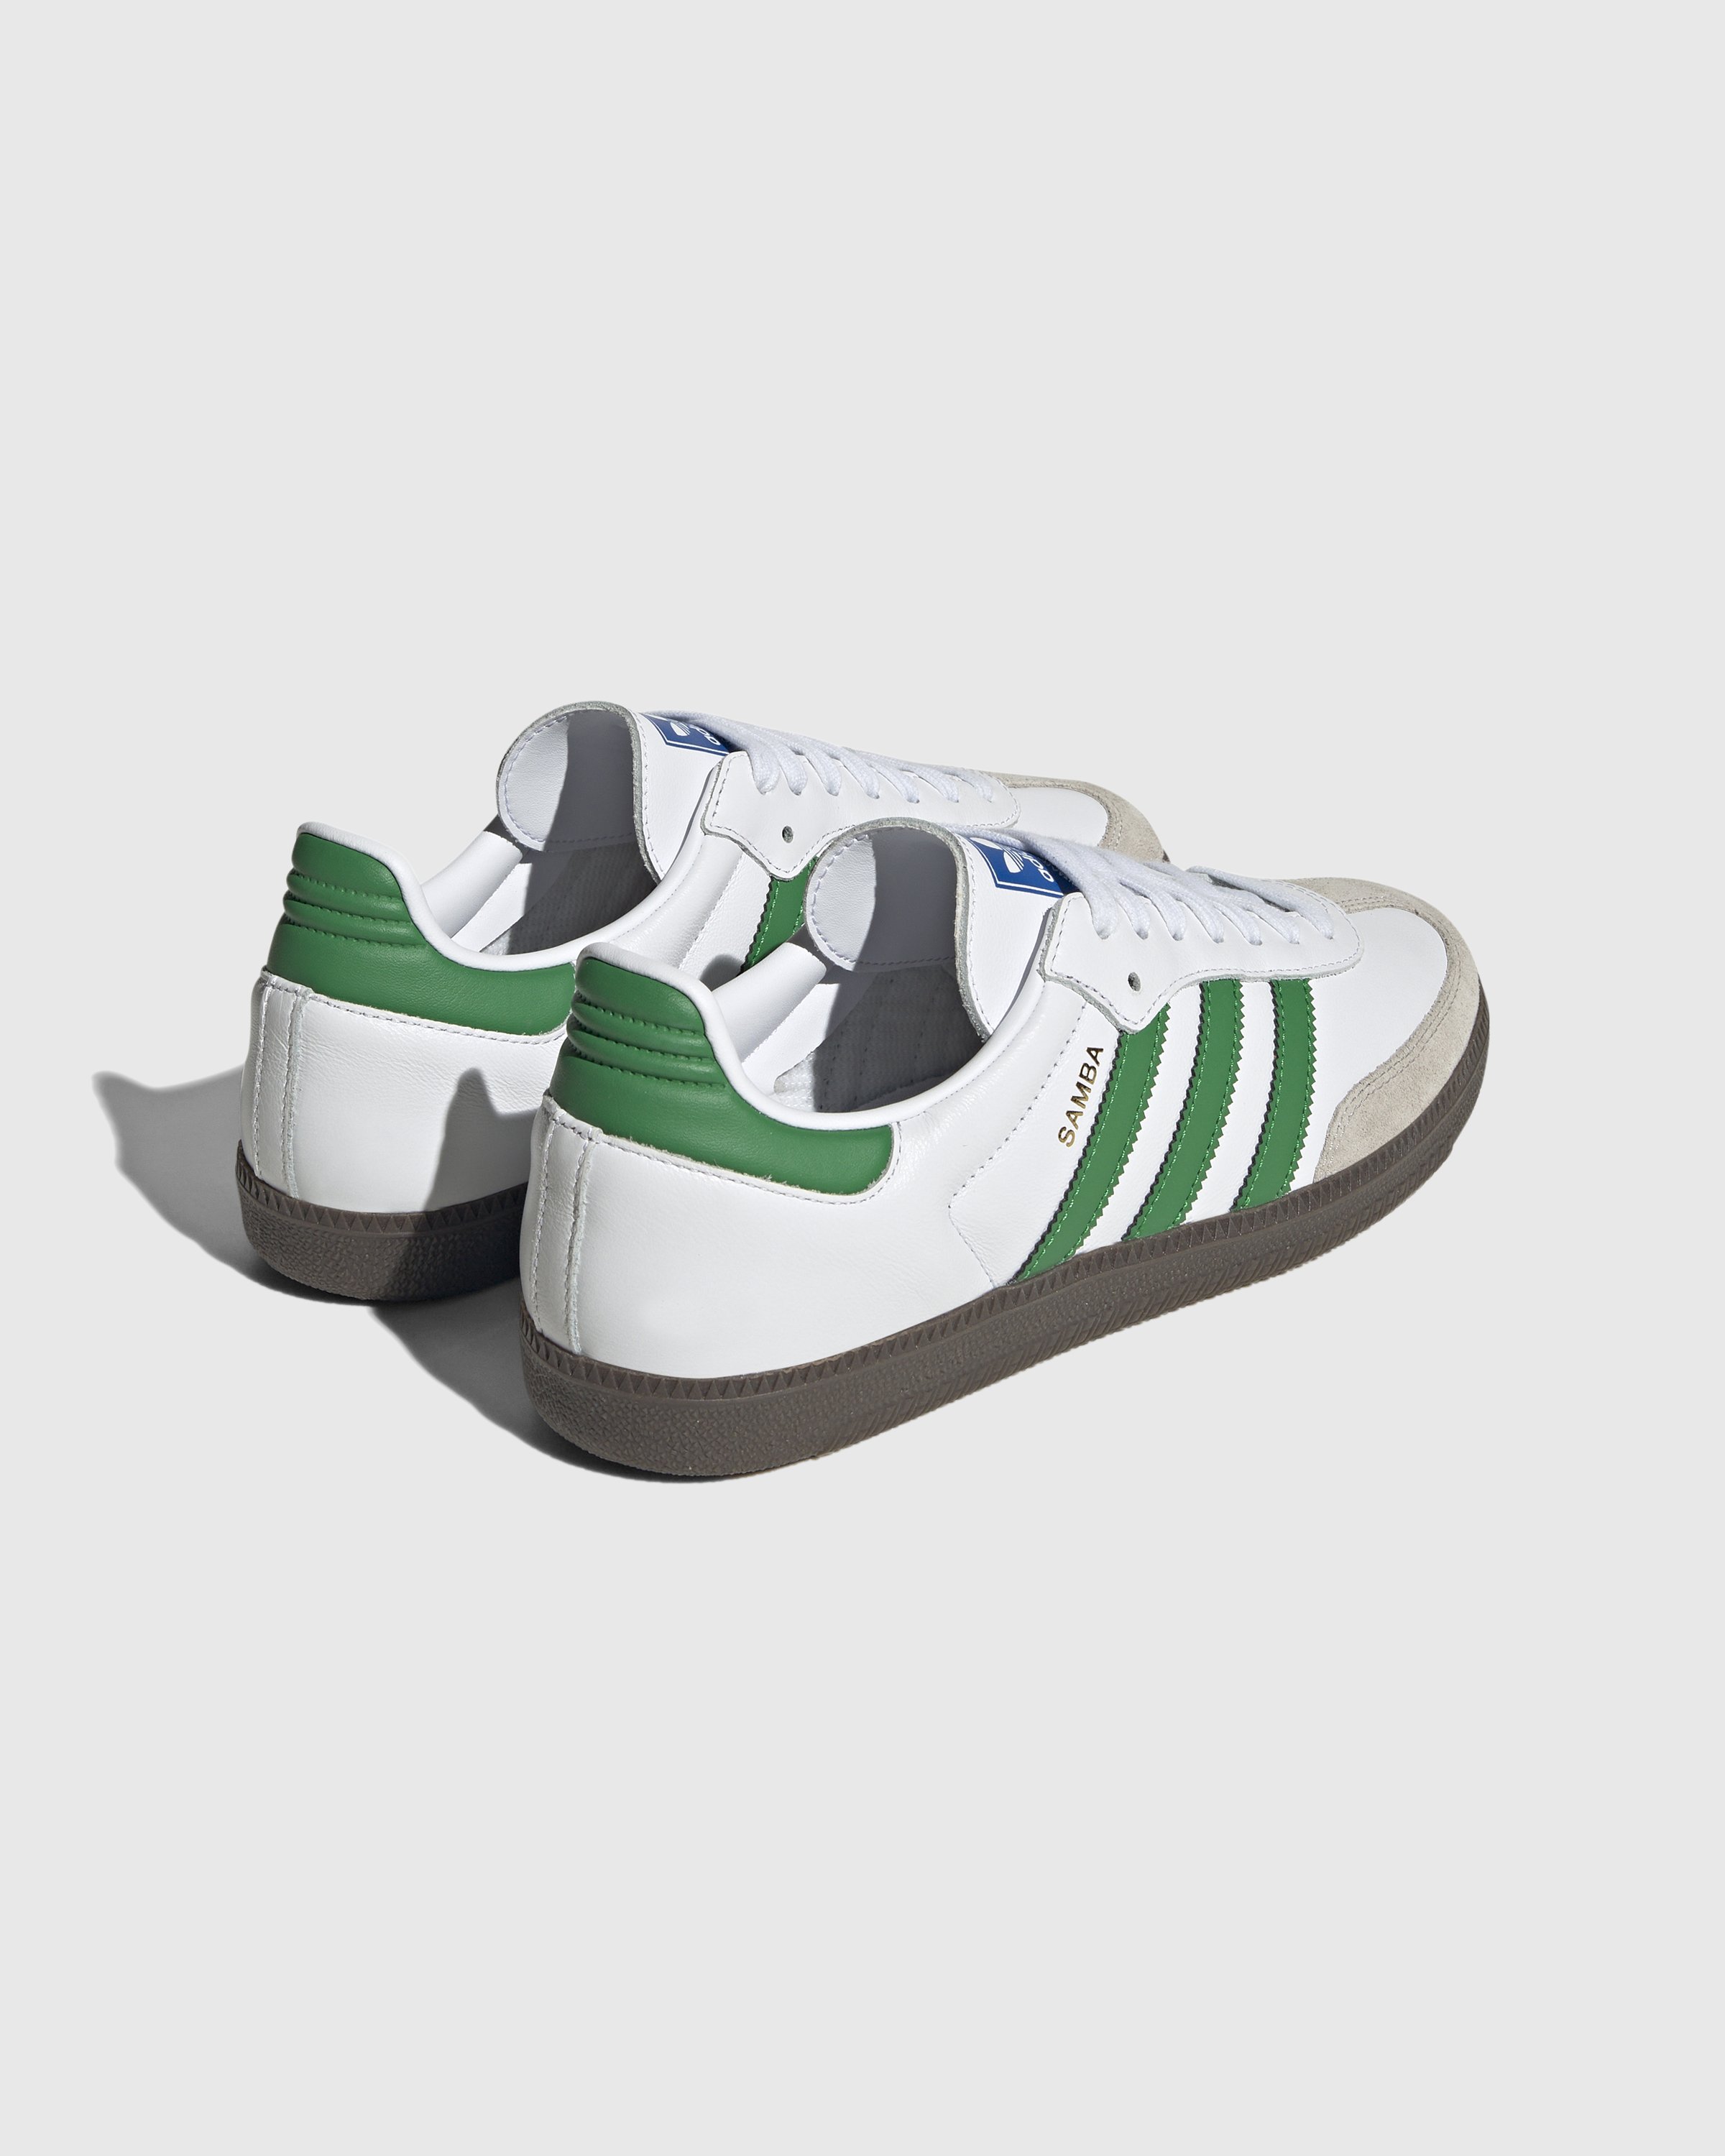 Adidas - Samba OG White/Green - Footwear - White - Image 3